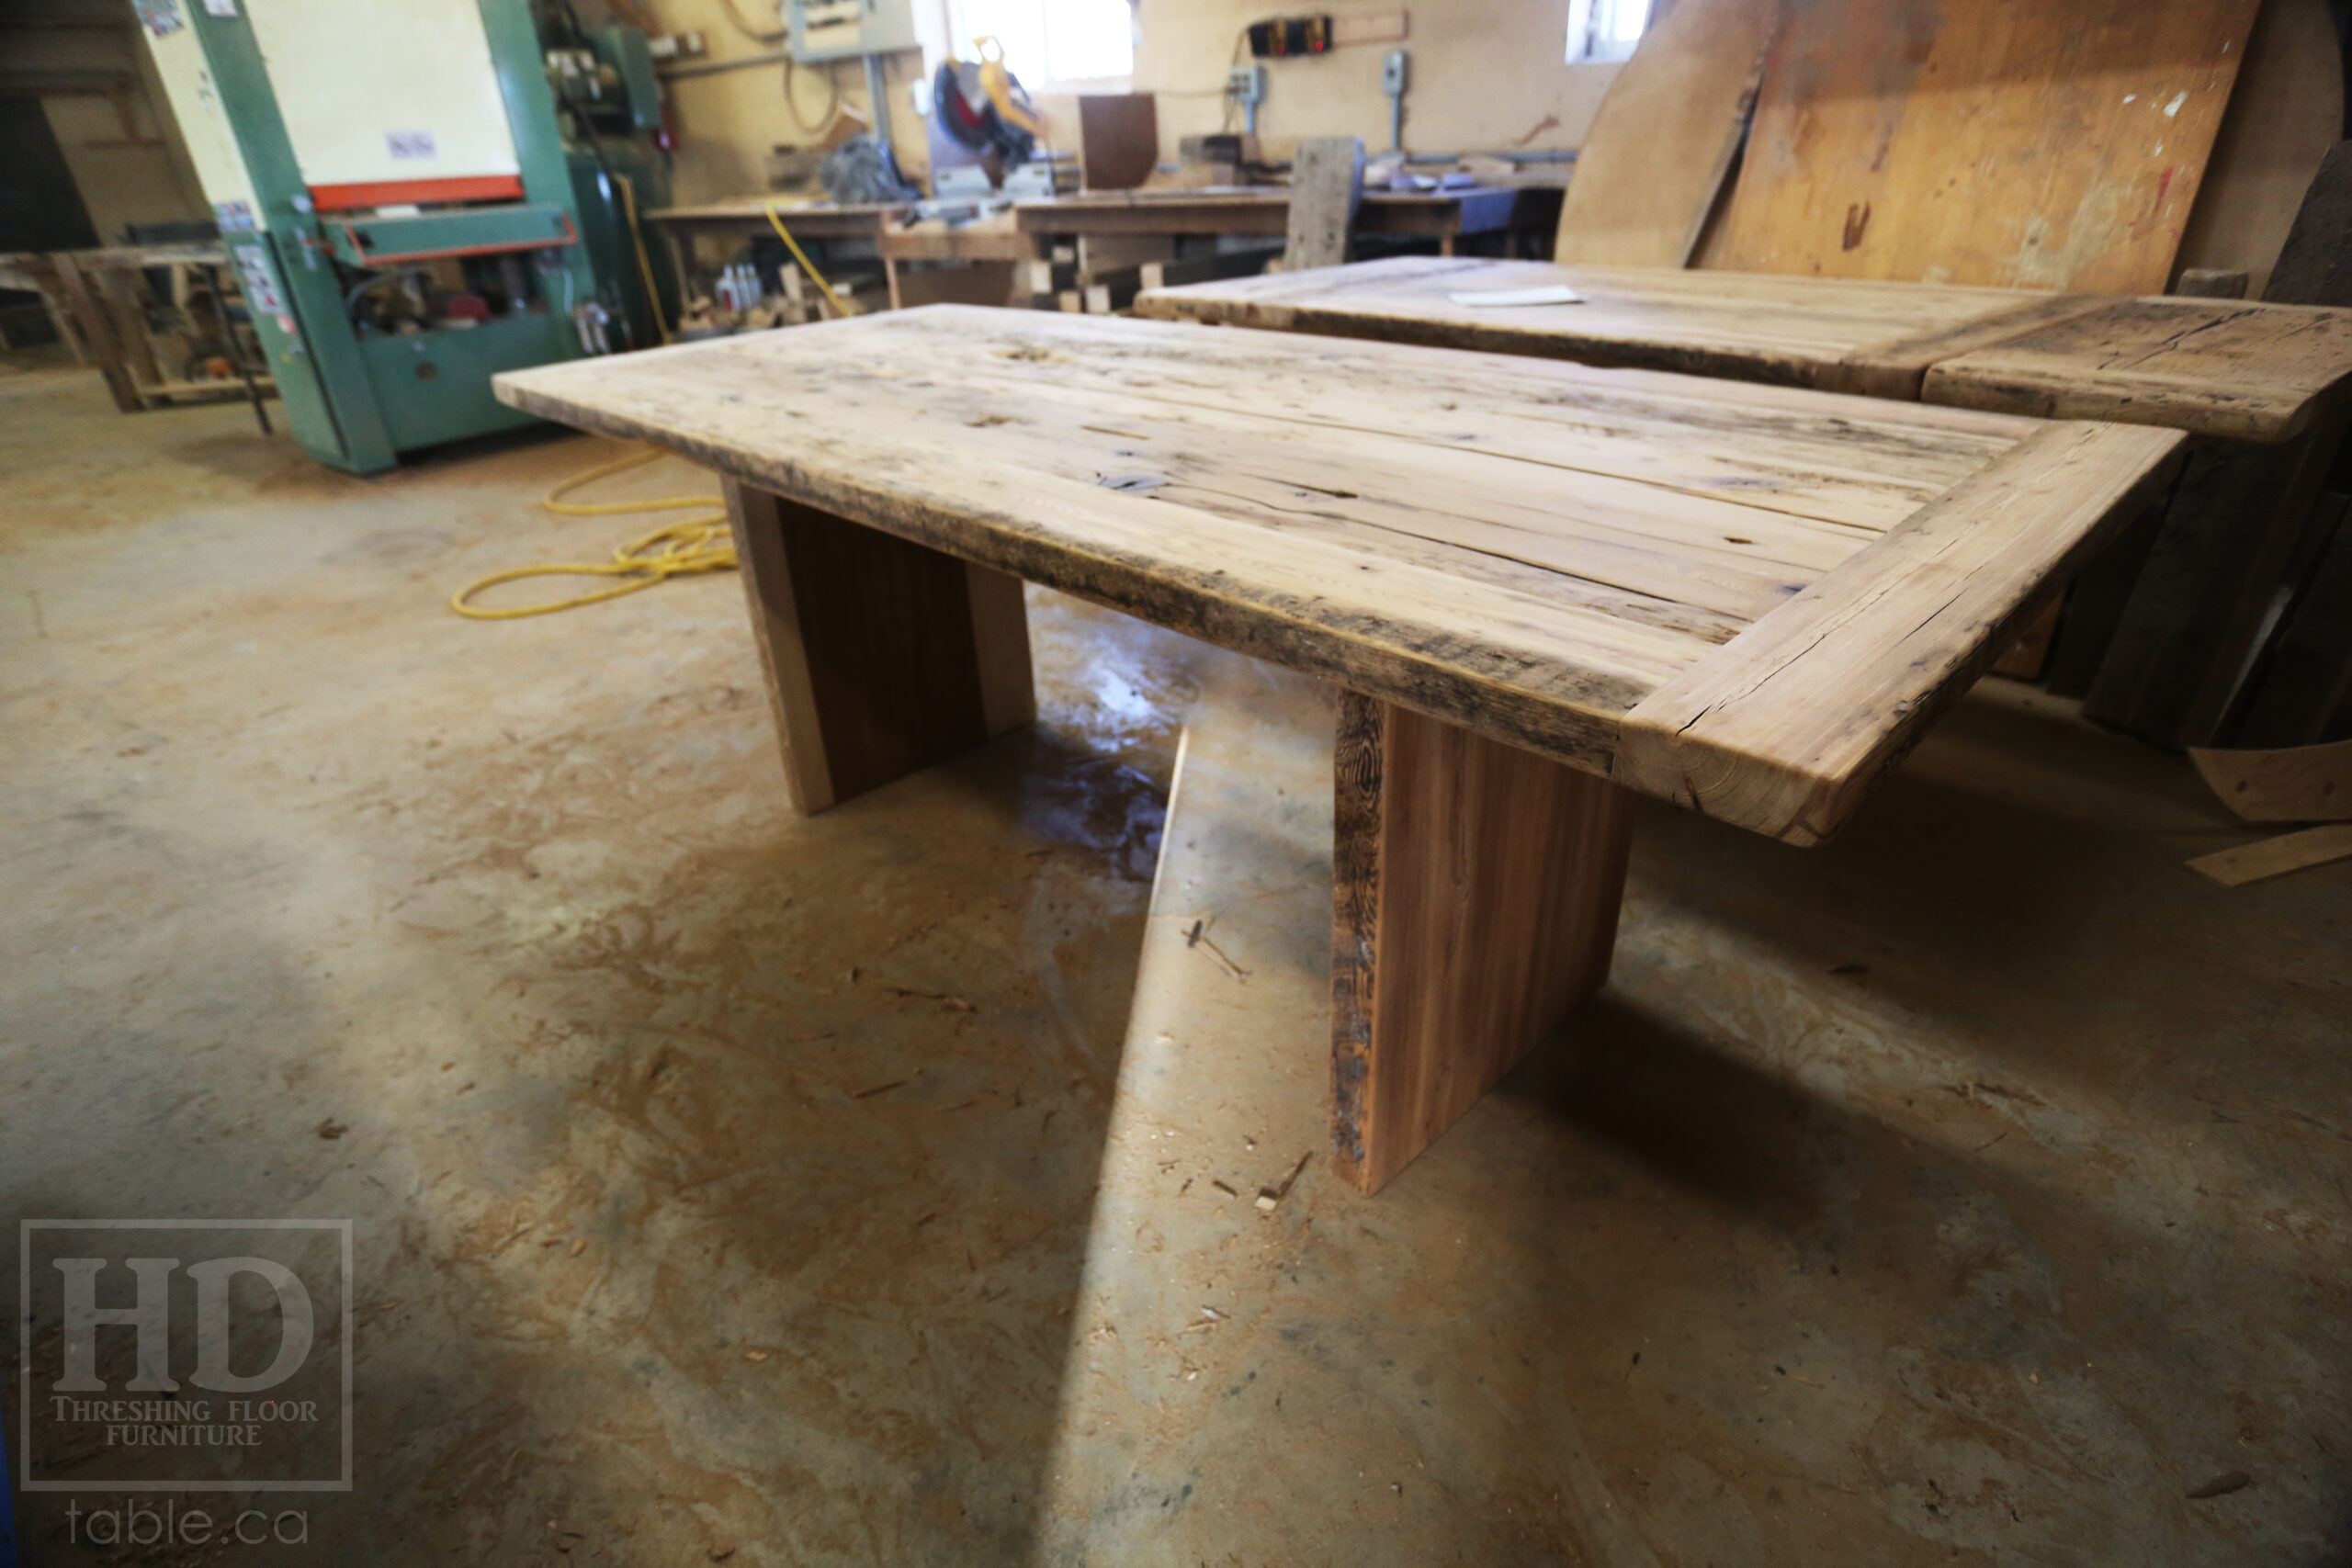 7' Ontario Barnwood Boardroom Table we made for an Orangeville Company - 36" wide - Modern Plank Base - Old Growth Hemlock Threshing Floor Construction - Original edges & distressing maintained - Premium epoxy + satin polyurethane finish  - www.table.ca